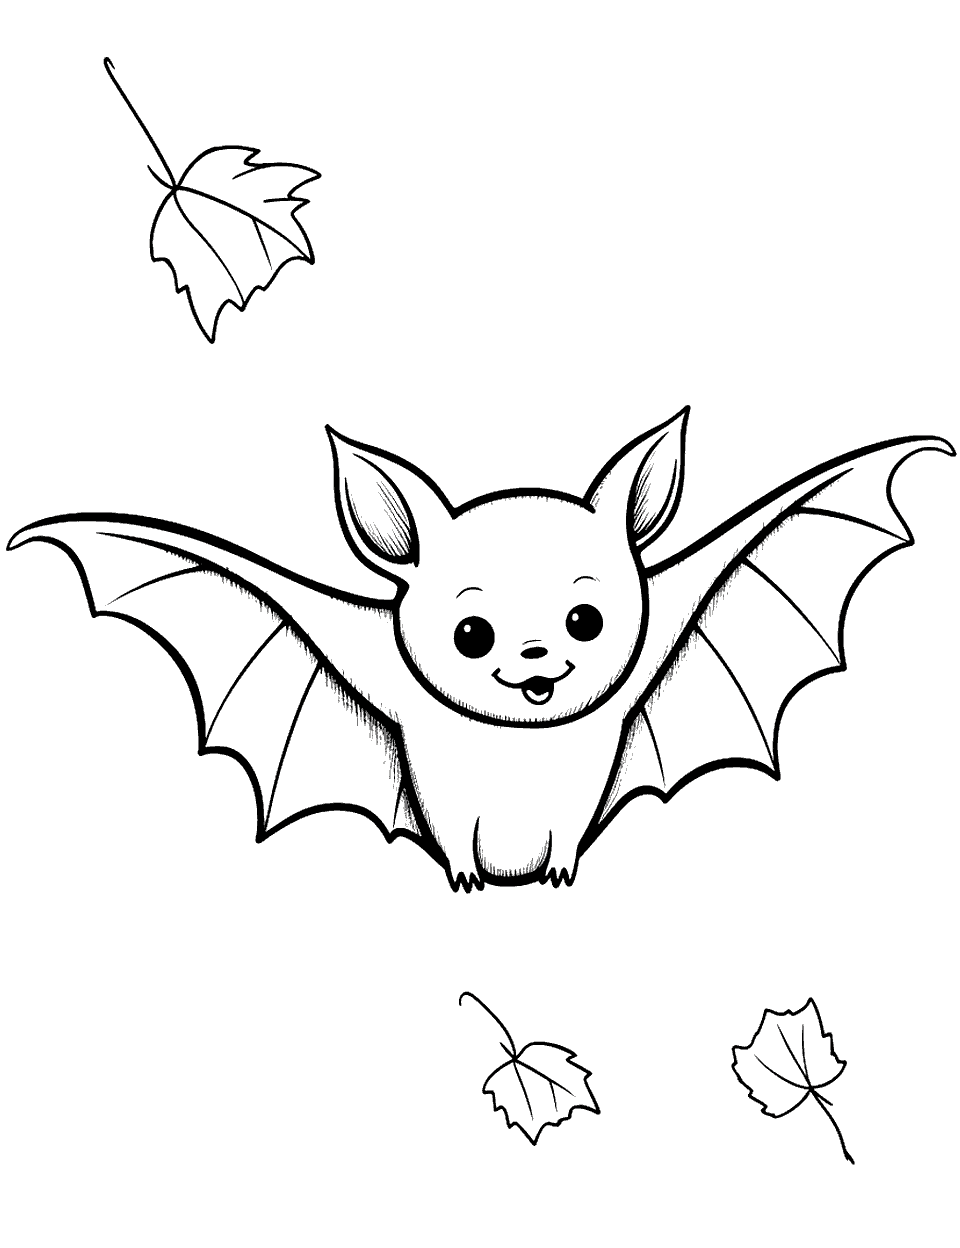 Bat and a Falling Leaf Coloring Page - A bat observing a falling leaf, symbolizing autumn.